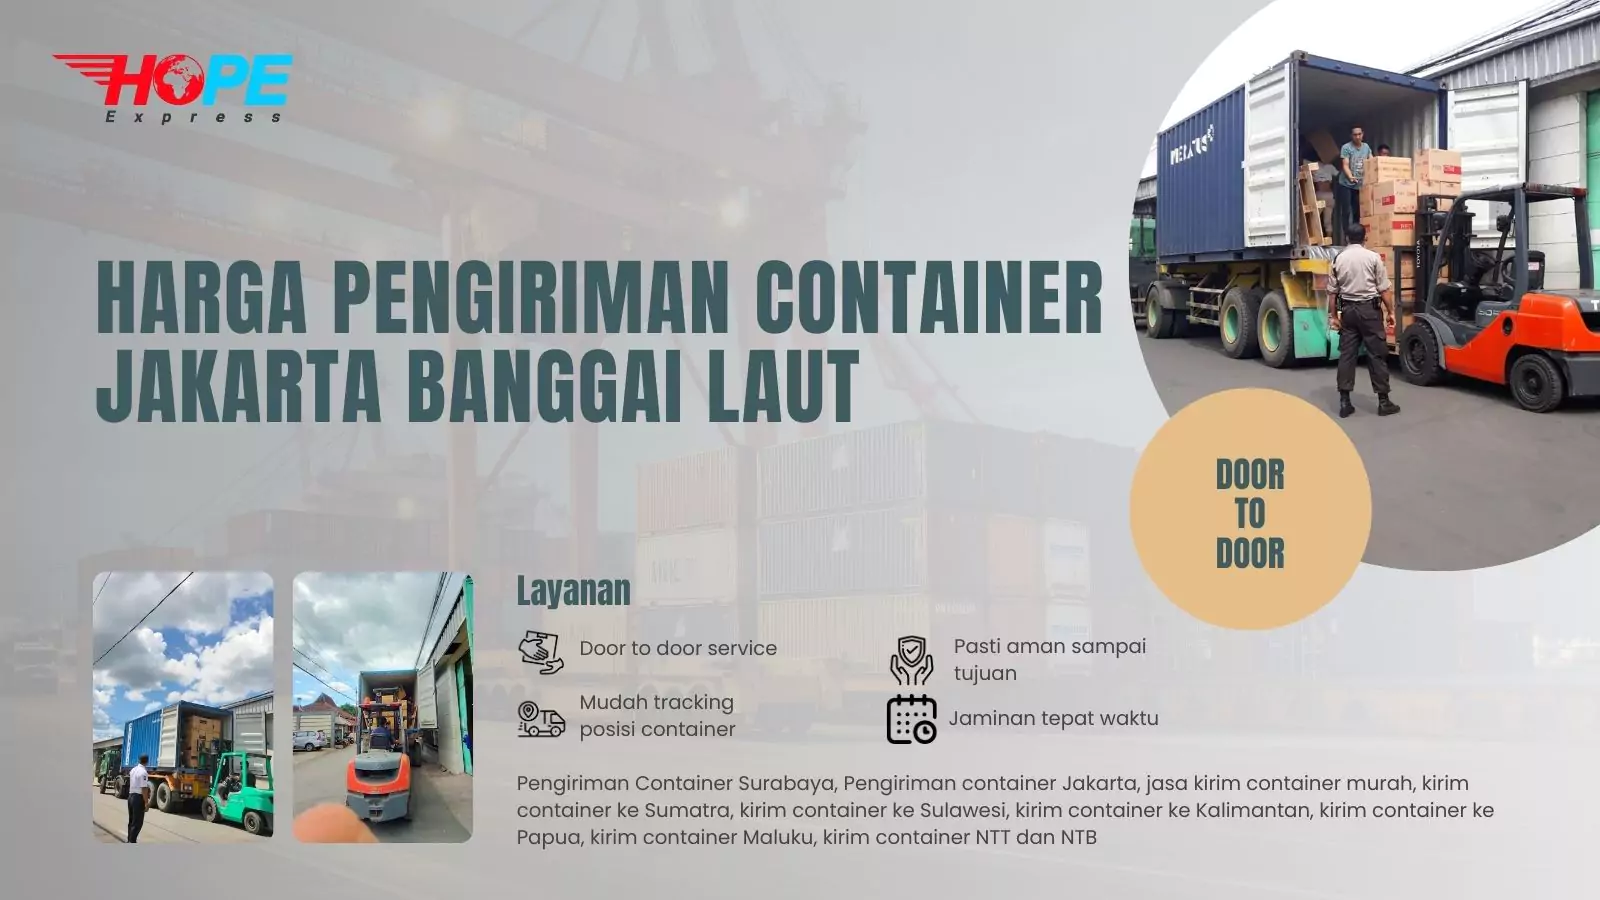 Harga Pengiriman Container Jakarta Banggai Laut